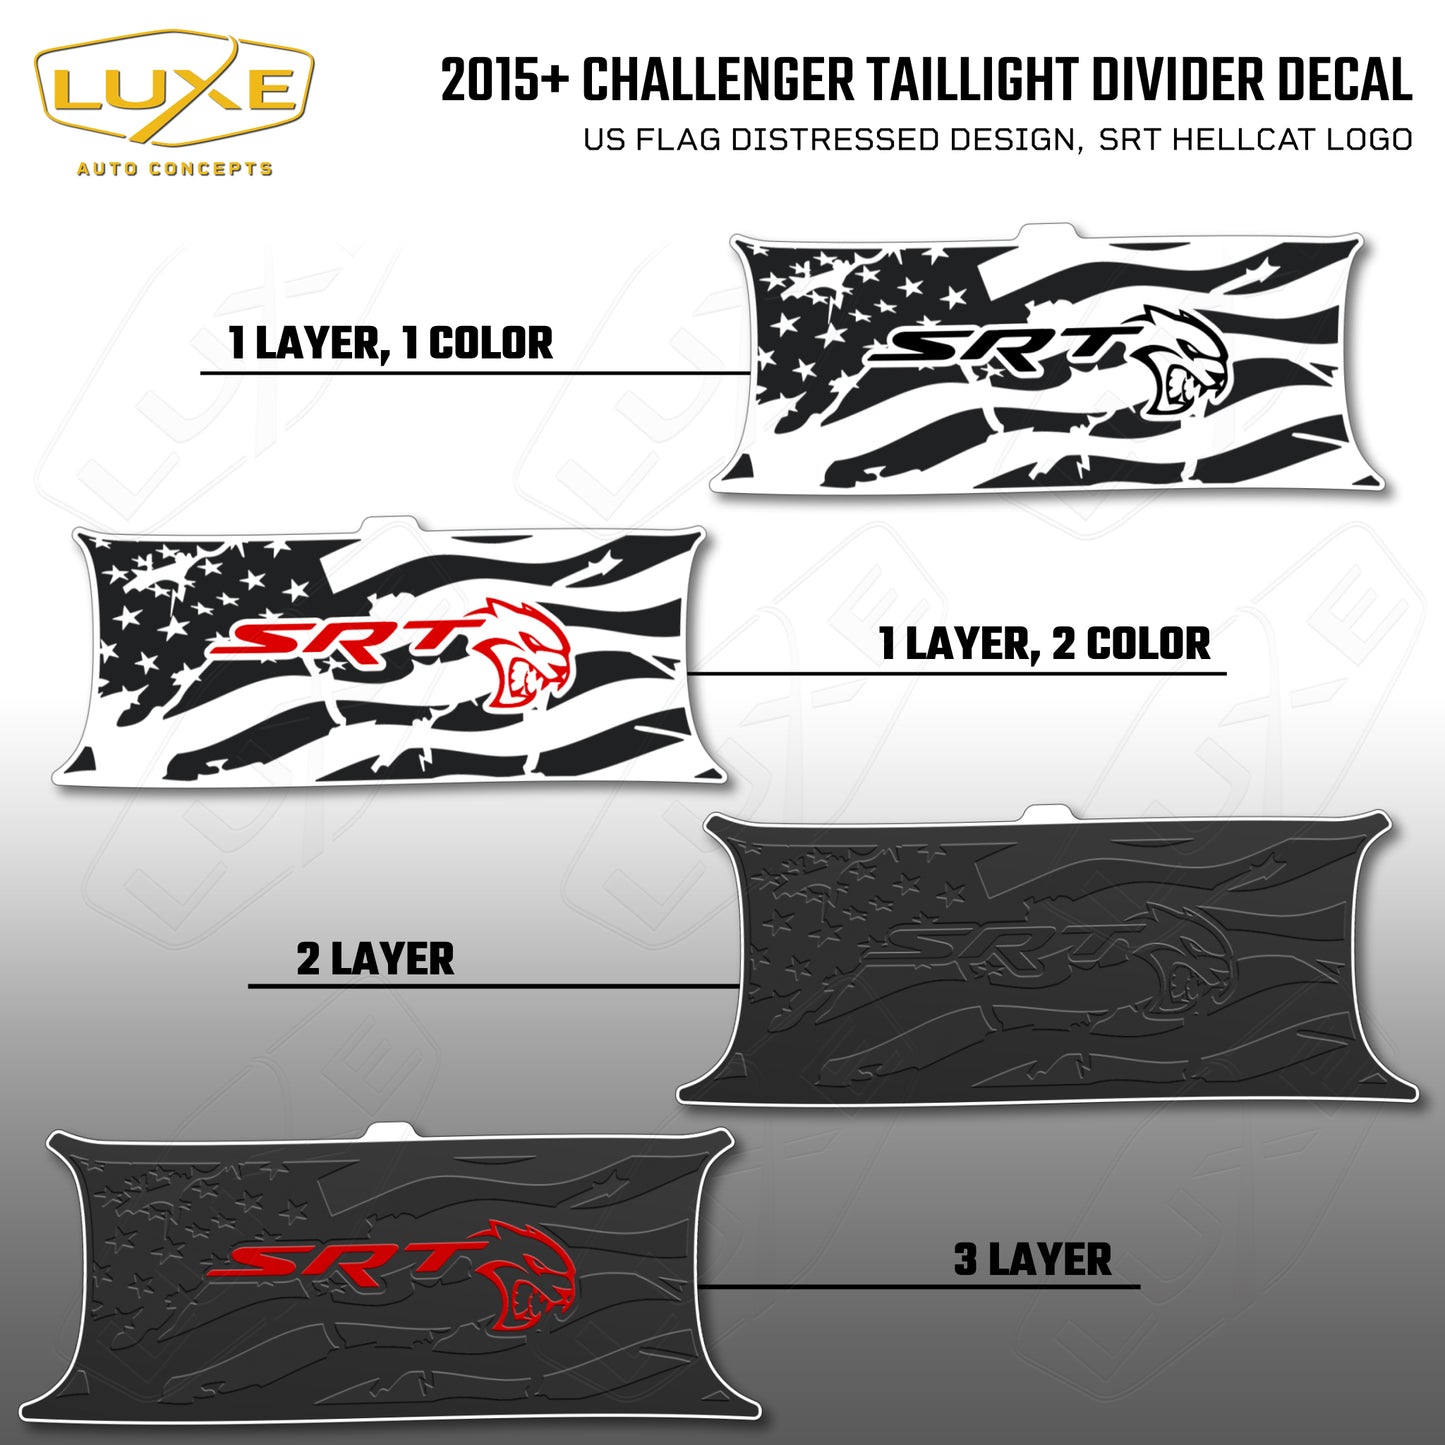 2015+ Challenger Taillight Center Divider Decal - US Flag Distressed Design, SRT Hellcat Logo